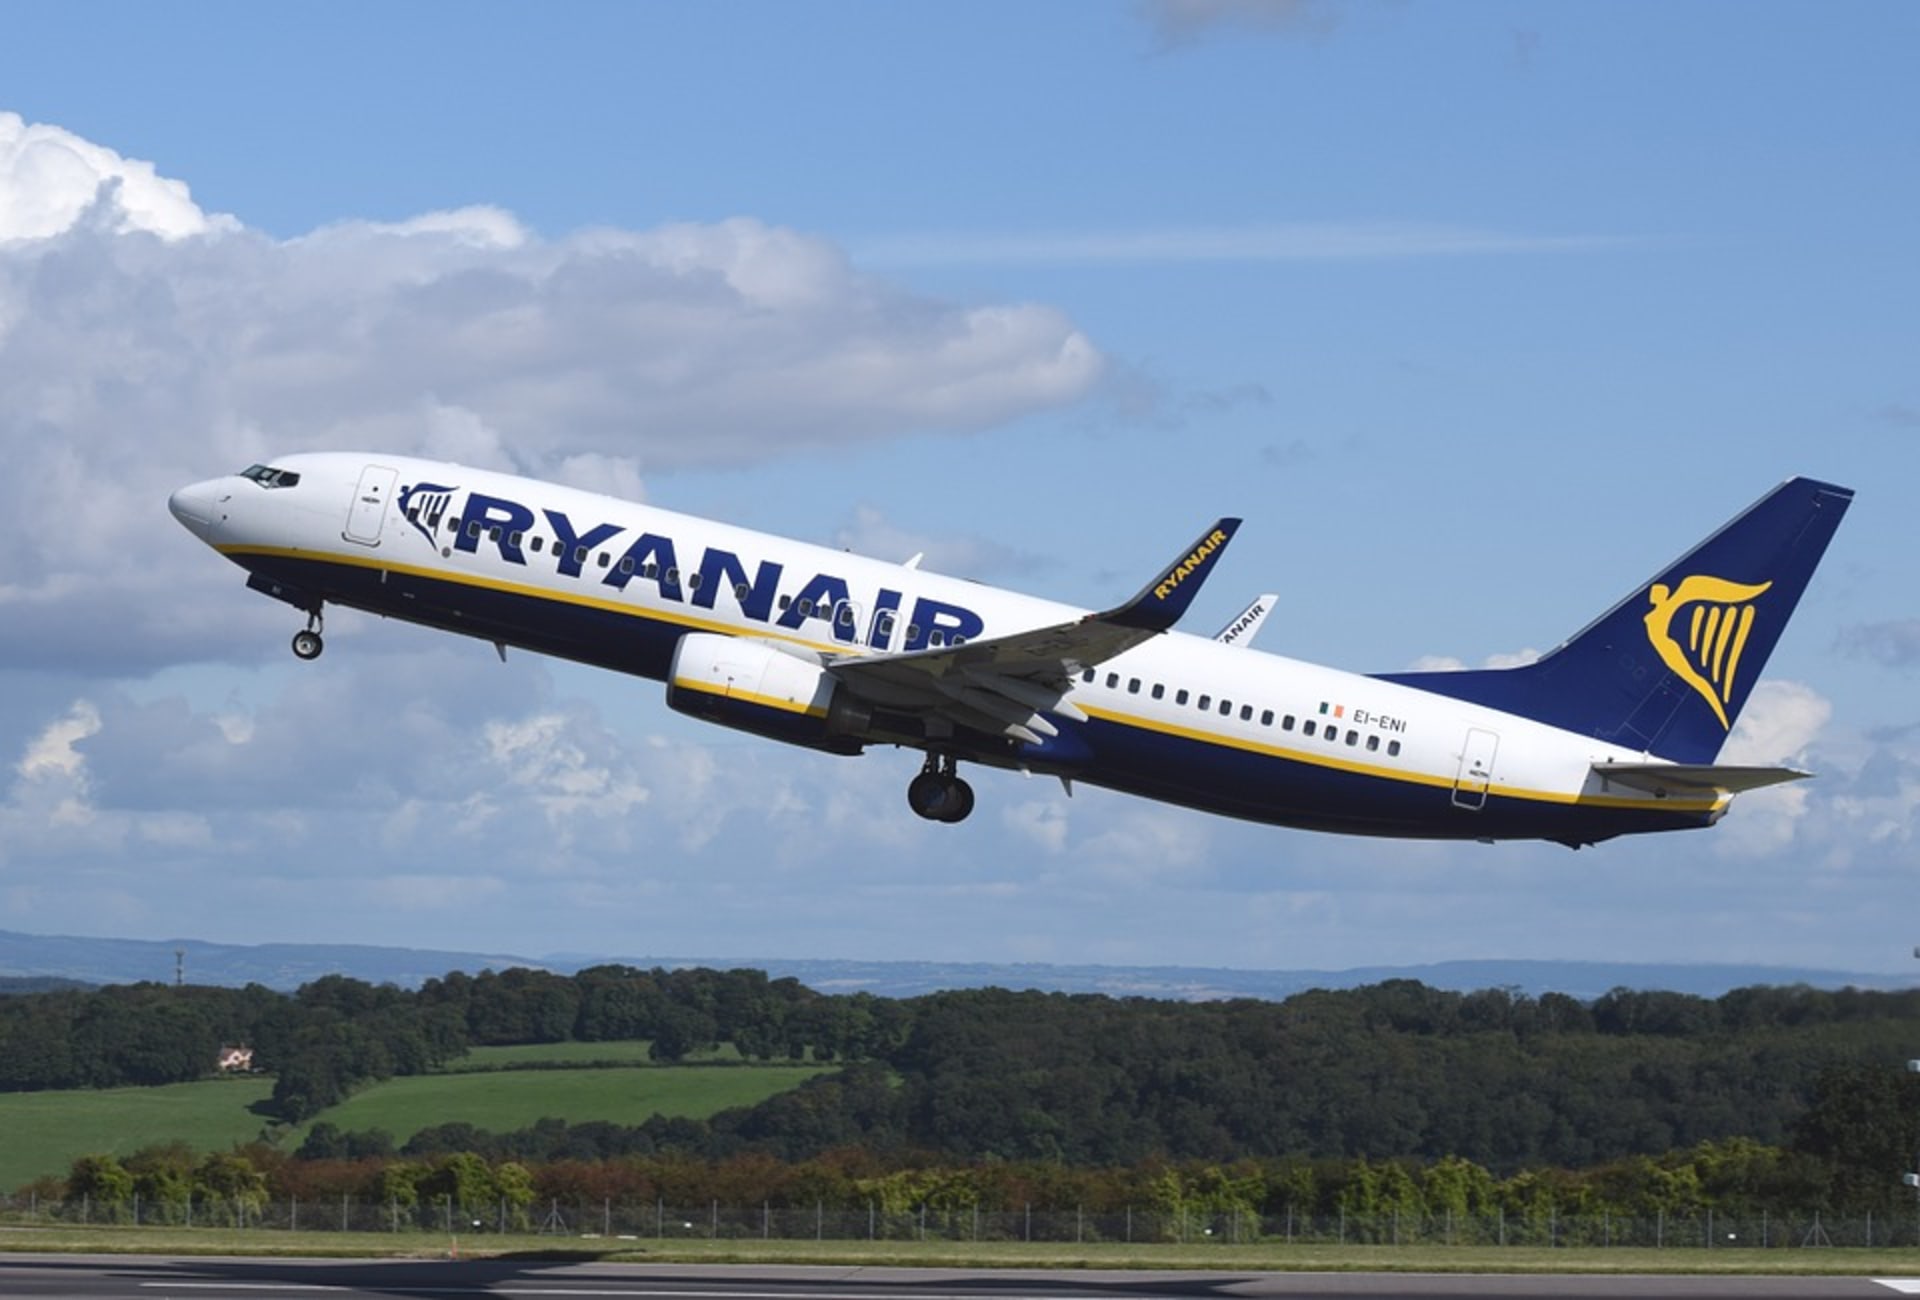 Letadlo společnosti Ryanair